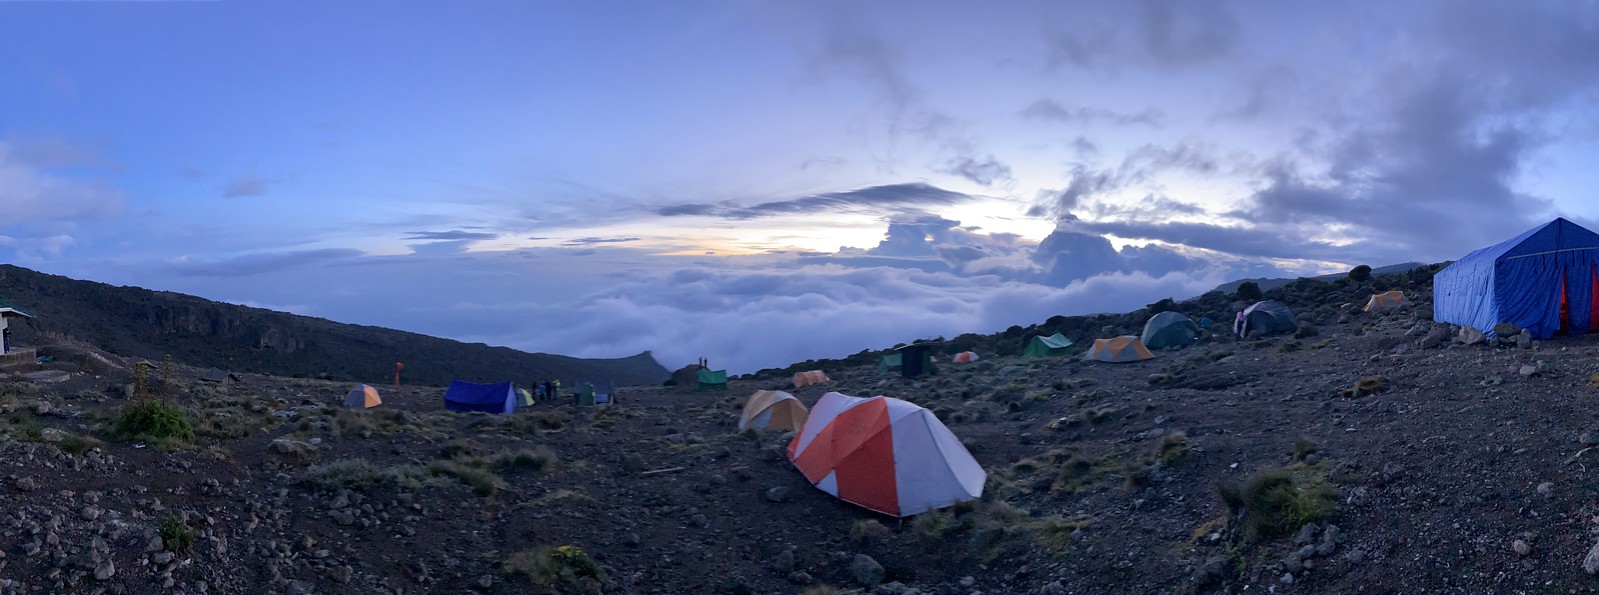 2020_EXPD_Kilimanjaro_Staff 30